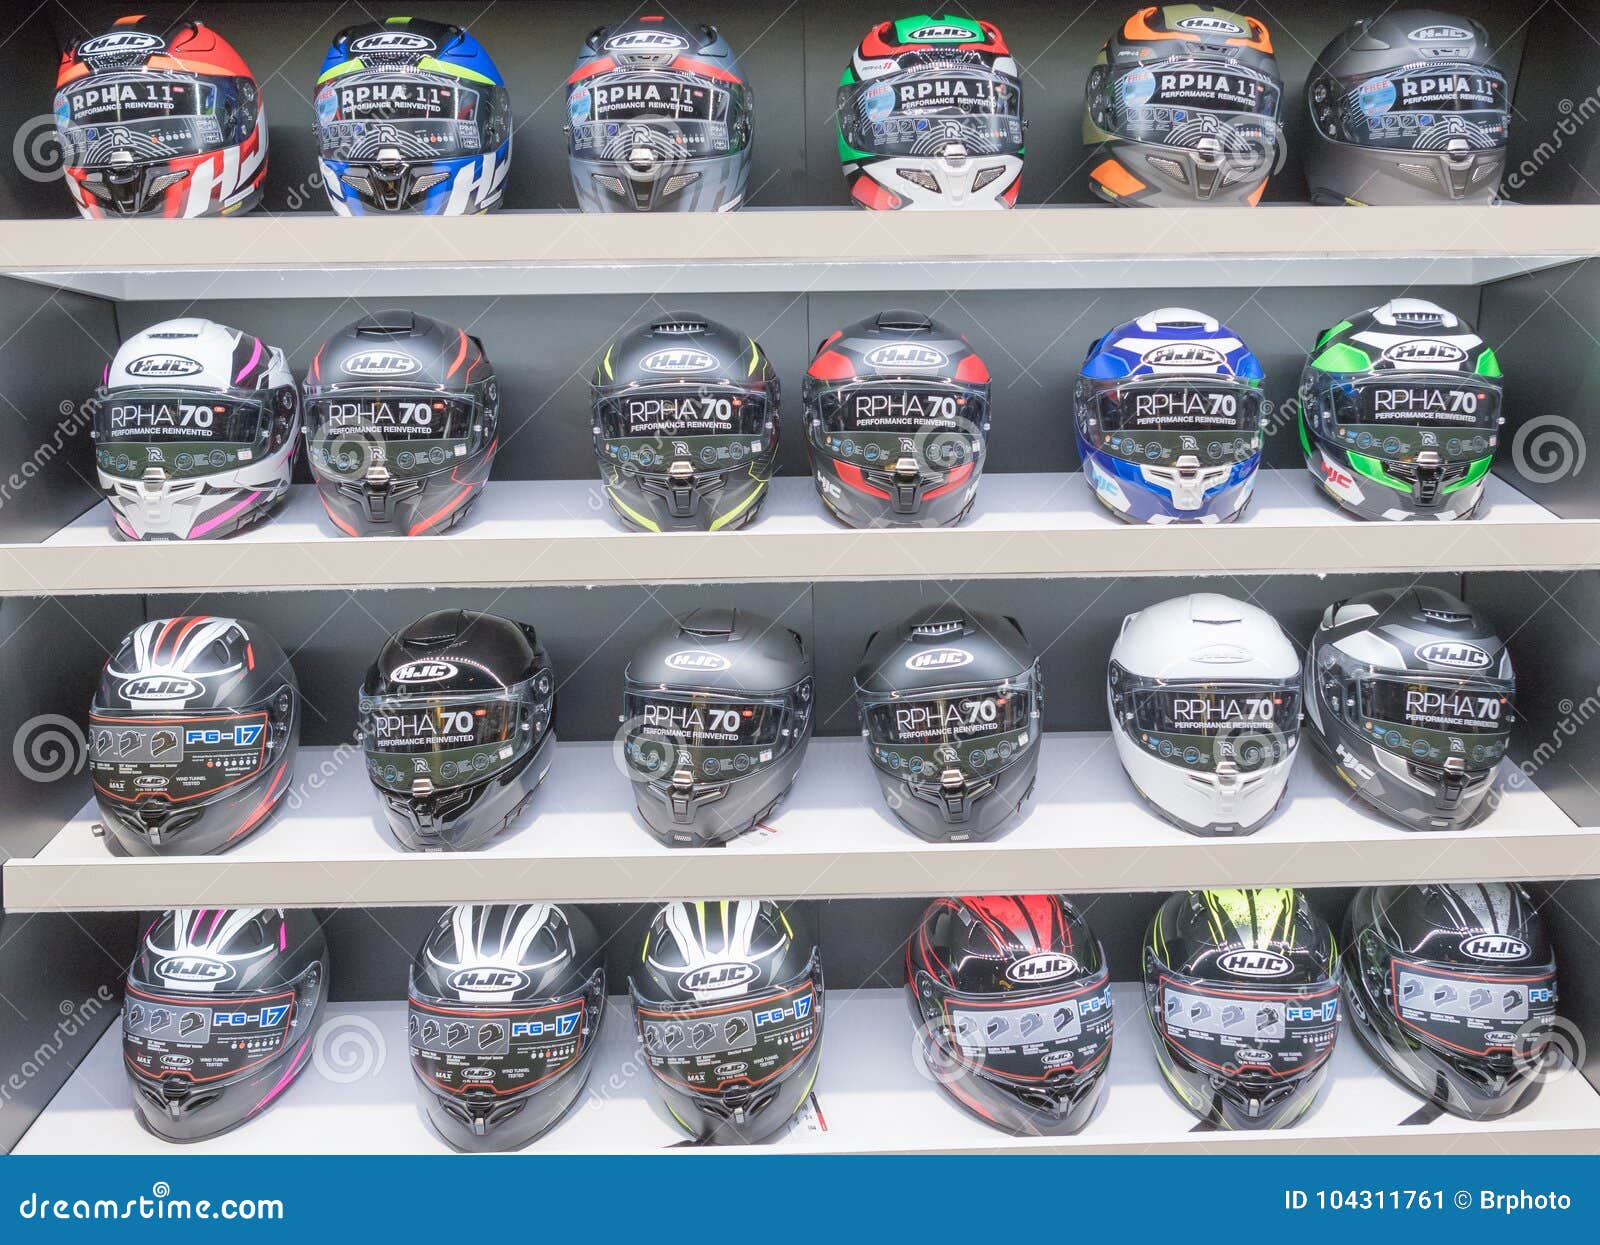 Motorcycle Helmets on Display Editorial Photo - Image of fair, engine